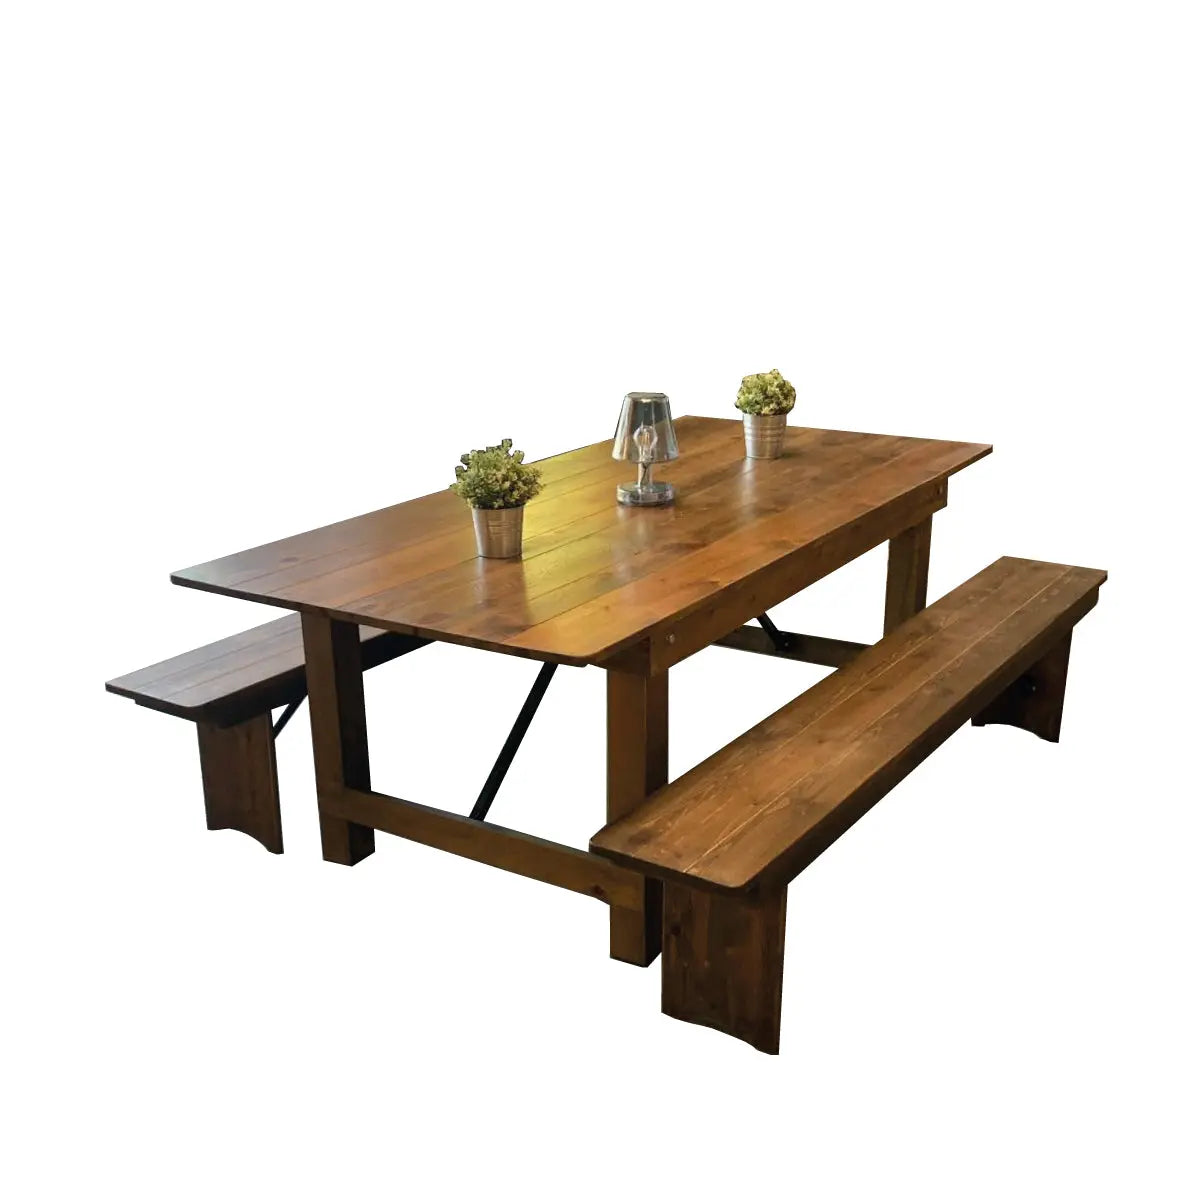 Soho farmhouse picnic table set Desert River Rentals